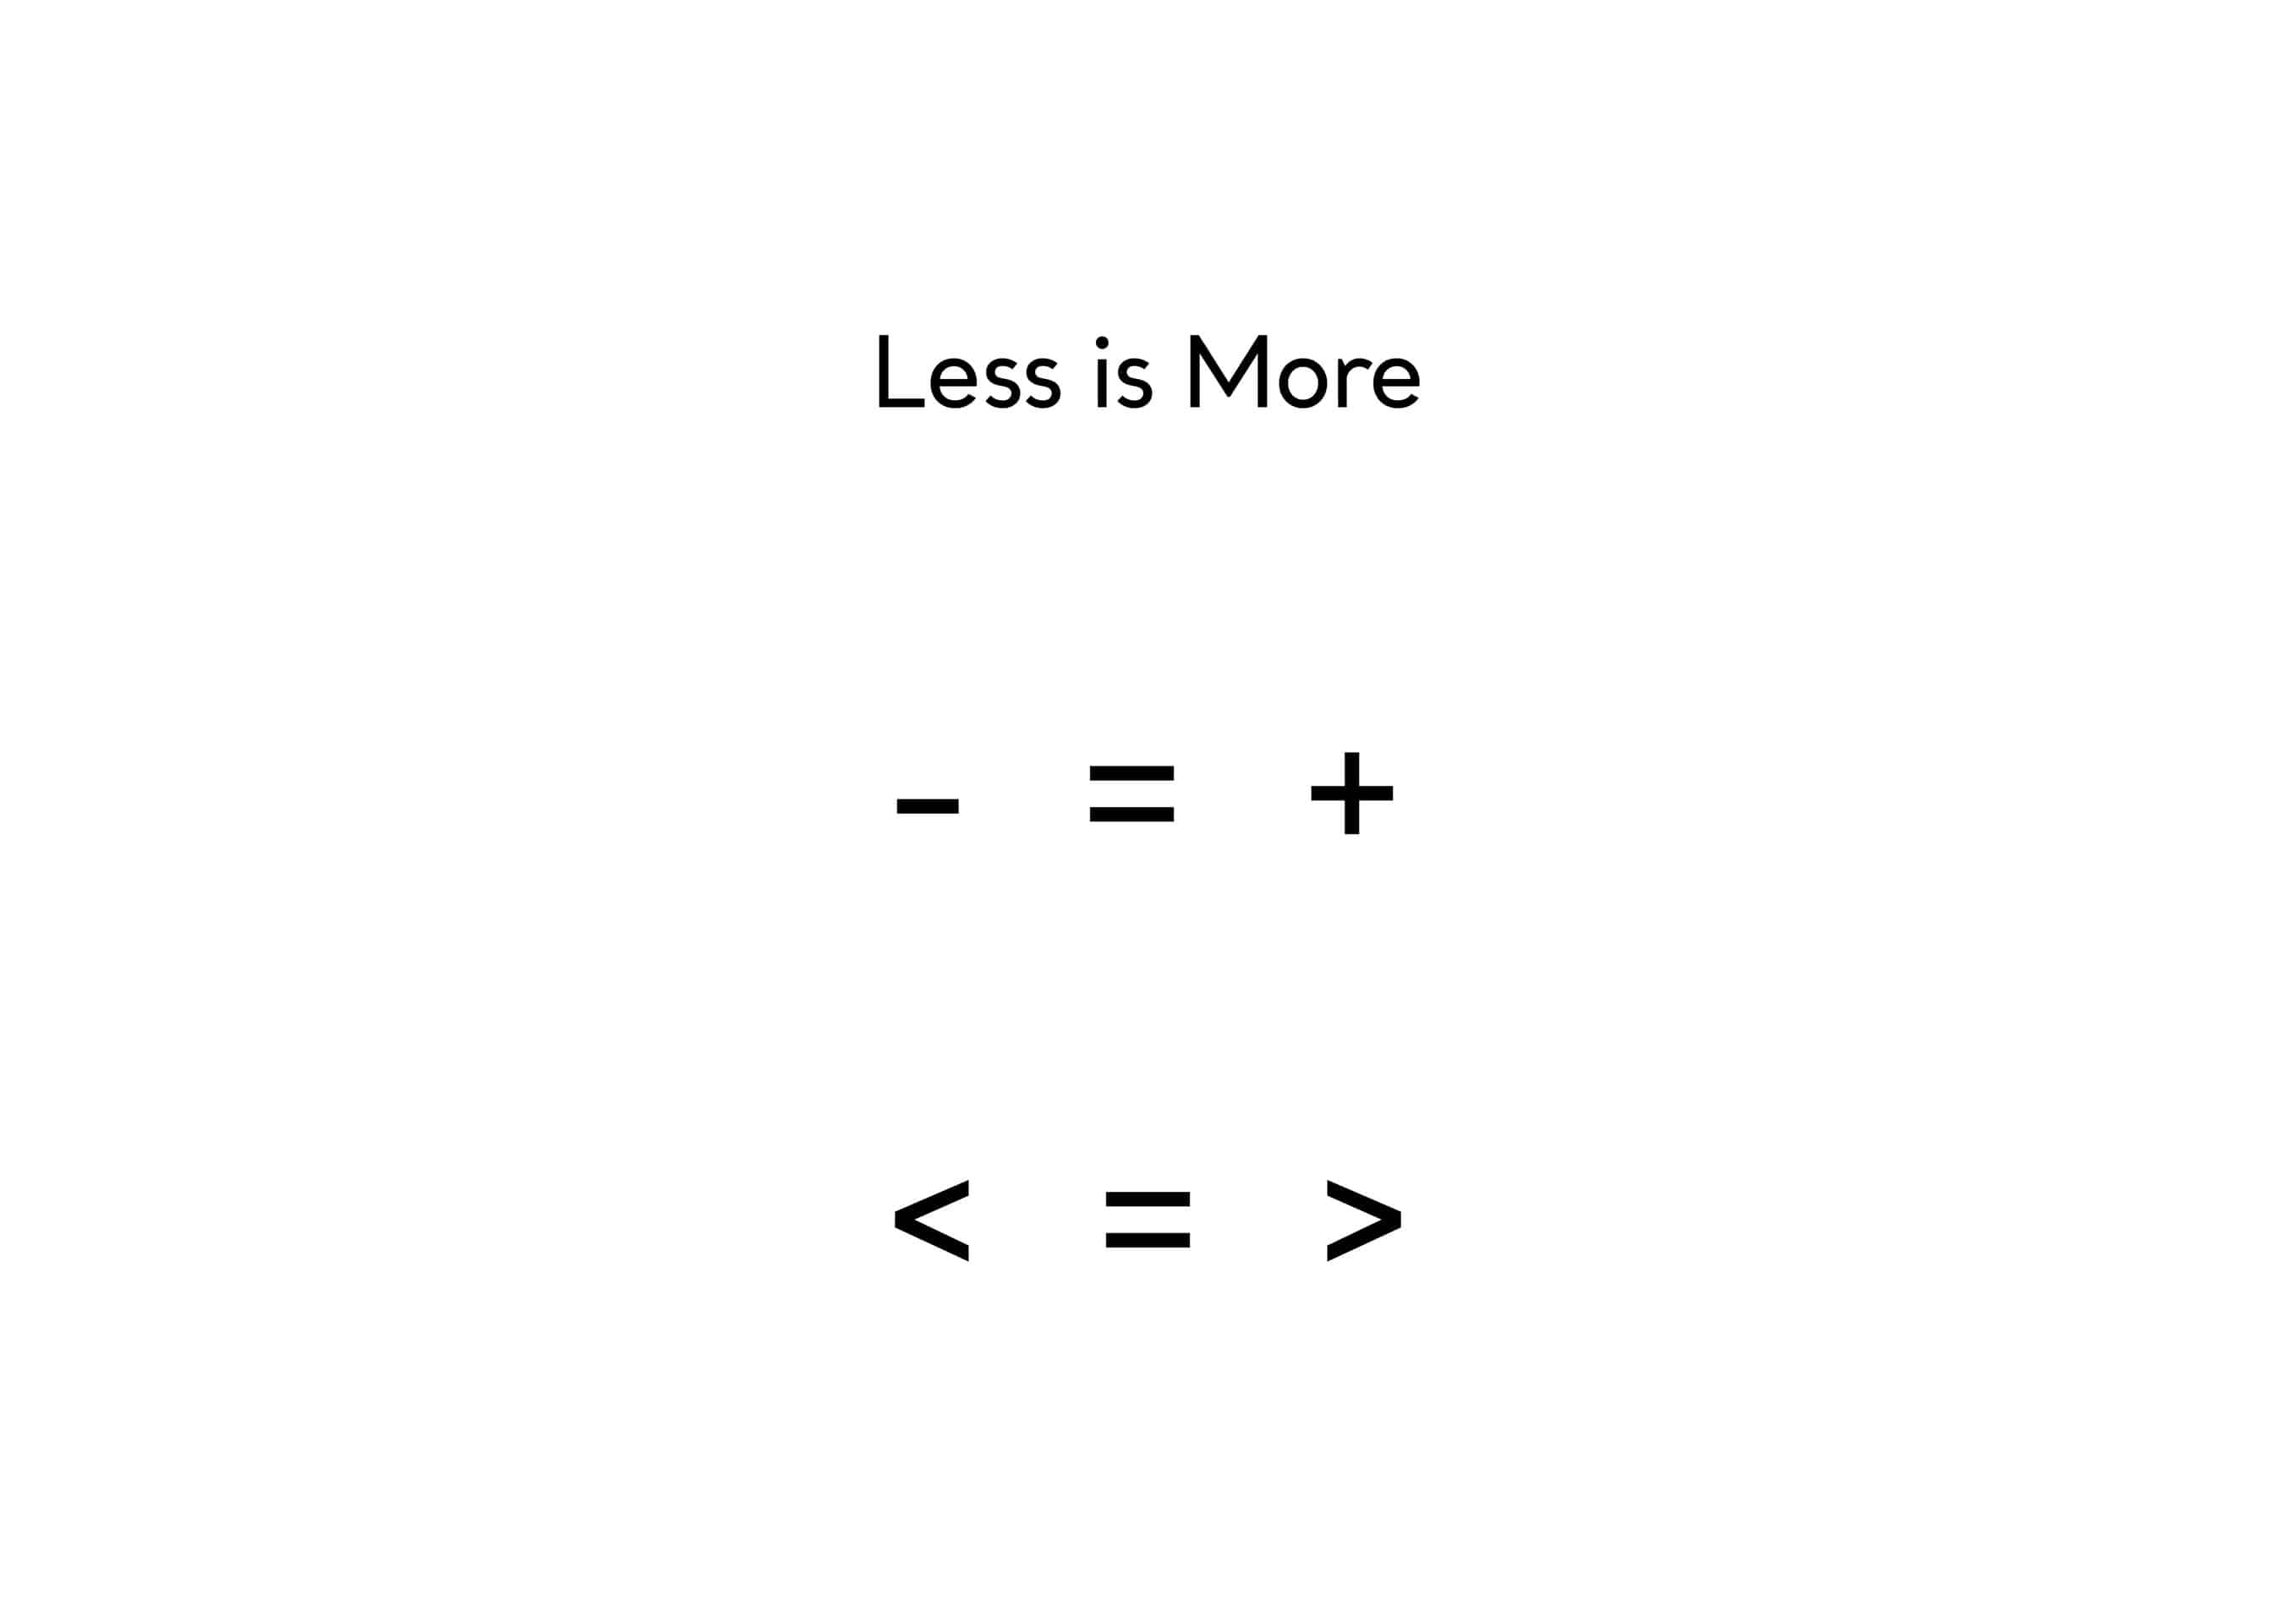 LIM STUDIO - Less is more